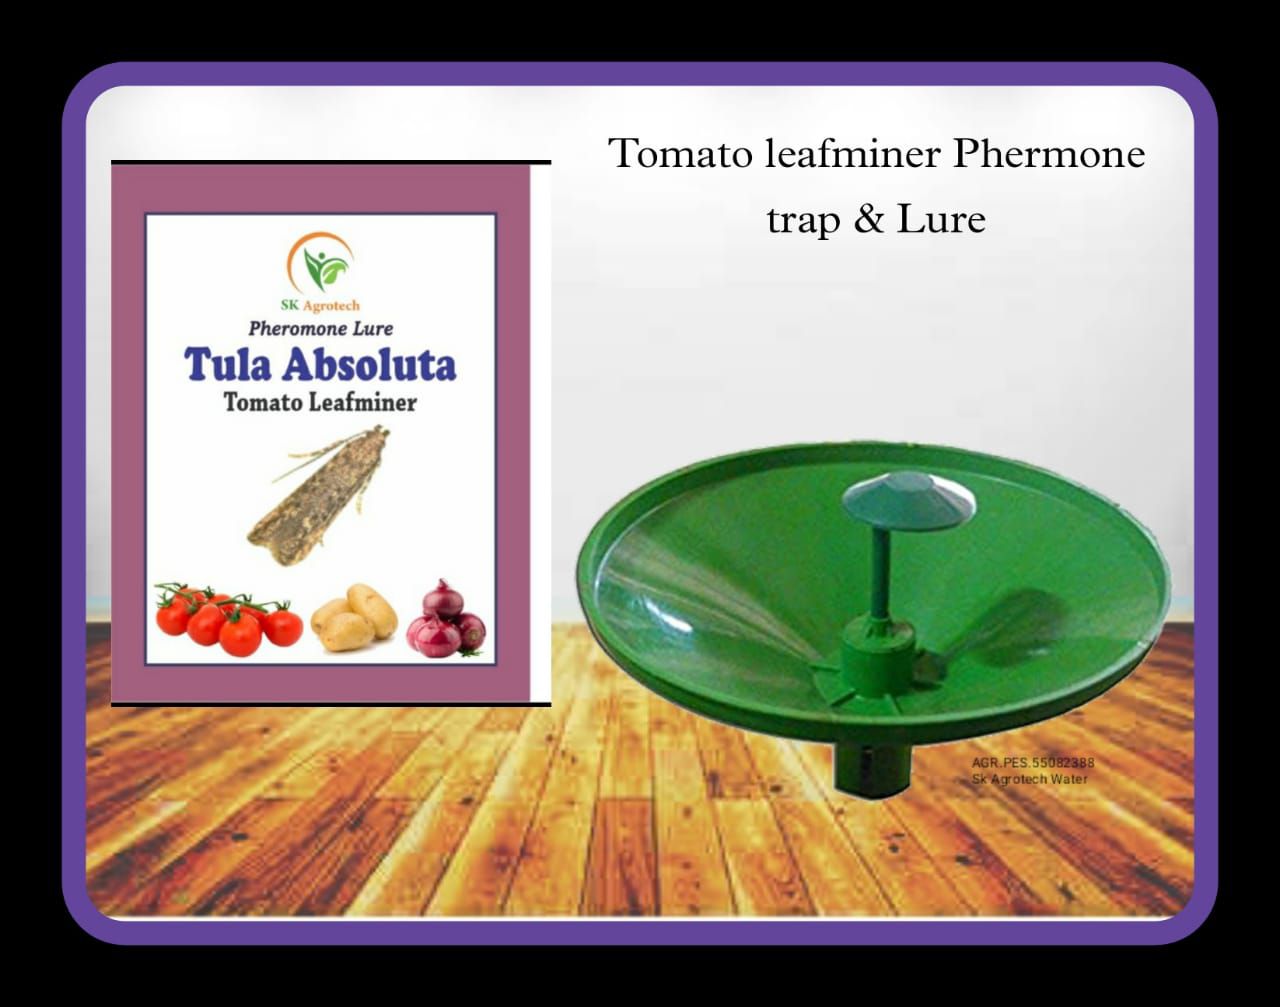 Water Pheromone Trap With Tuta Absoluta Pheromone Lure | Buy Now